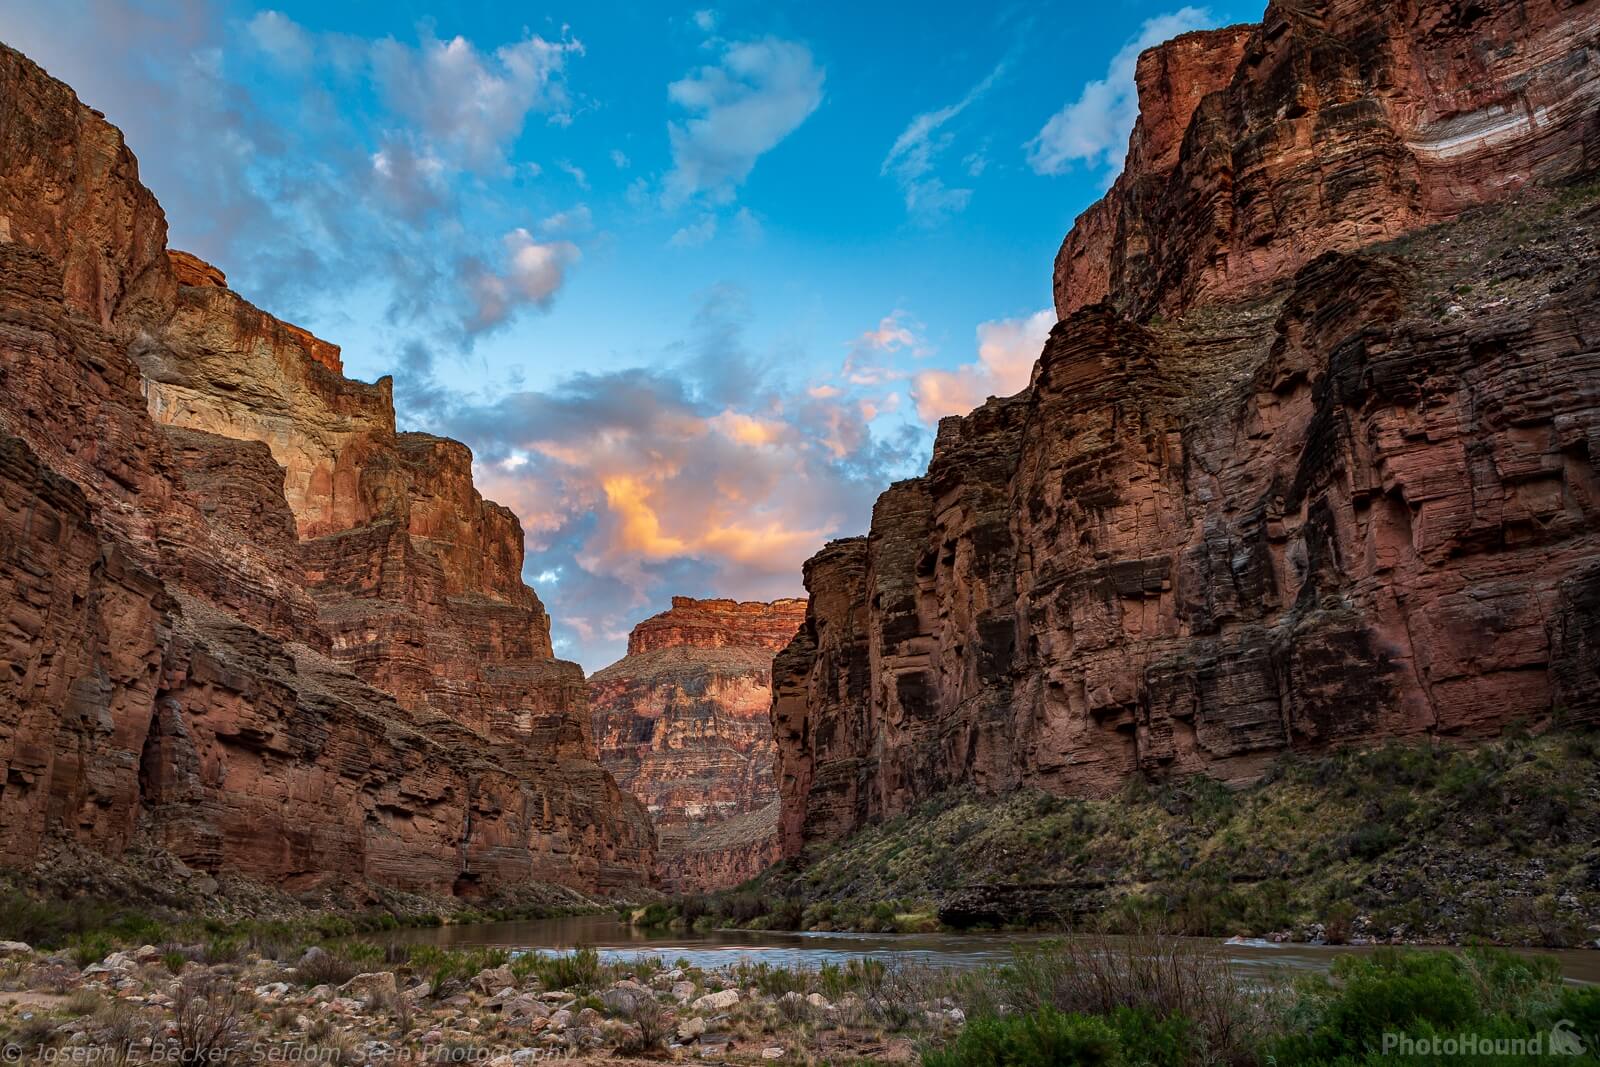 Image of Fern Glen Canyon by Joe Becker